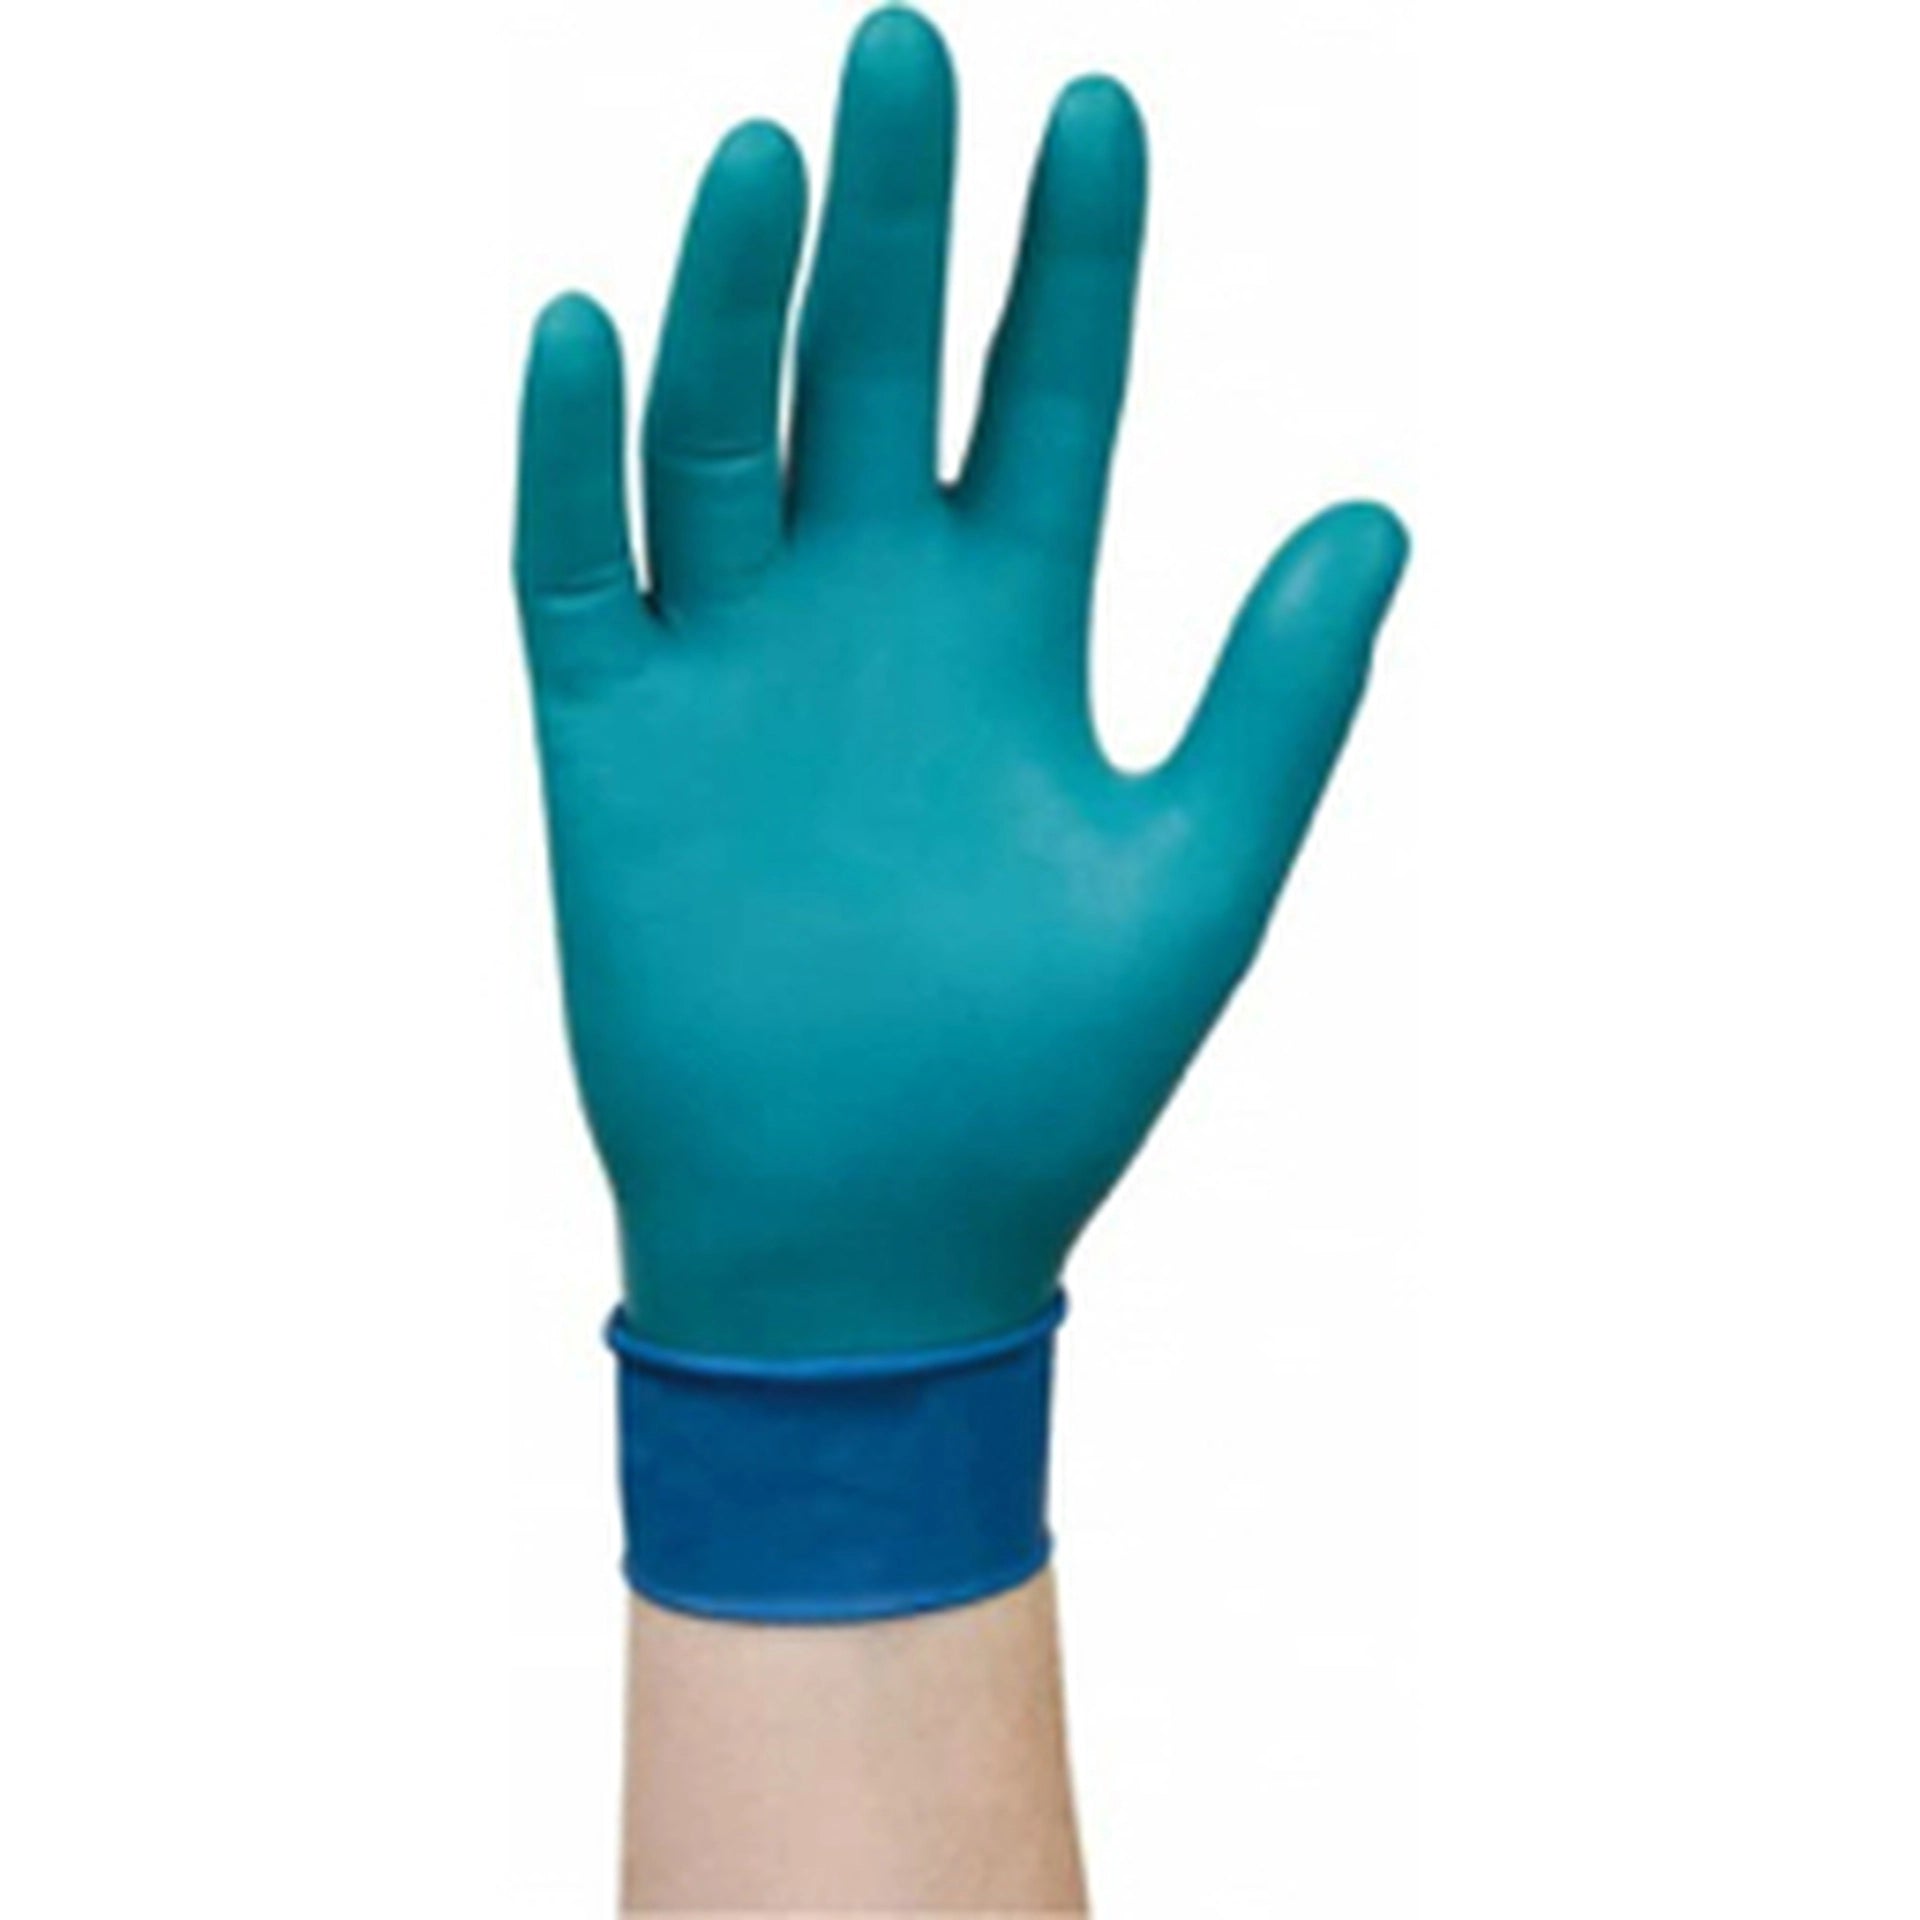 Microflex 93260080 93-260 Chemical Resistant Disposable Gloves, Medium, Neoprene/Nitrile, 7.8-mil, Powder-Free, Green - MPR Tools & Equipment